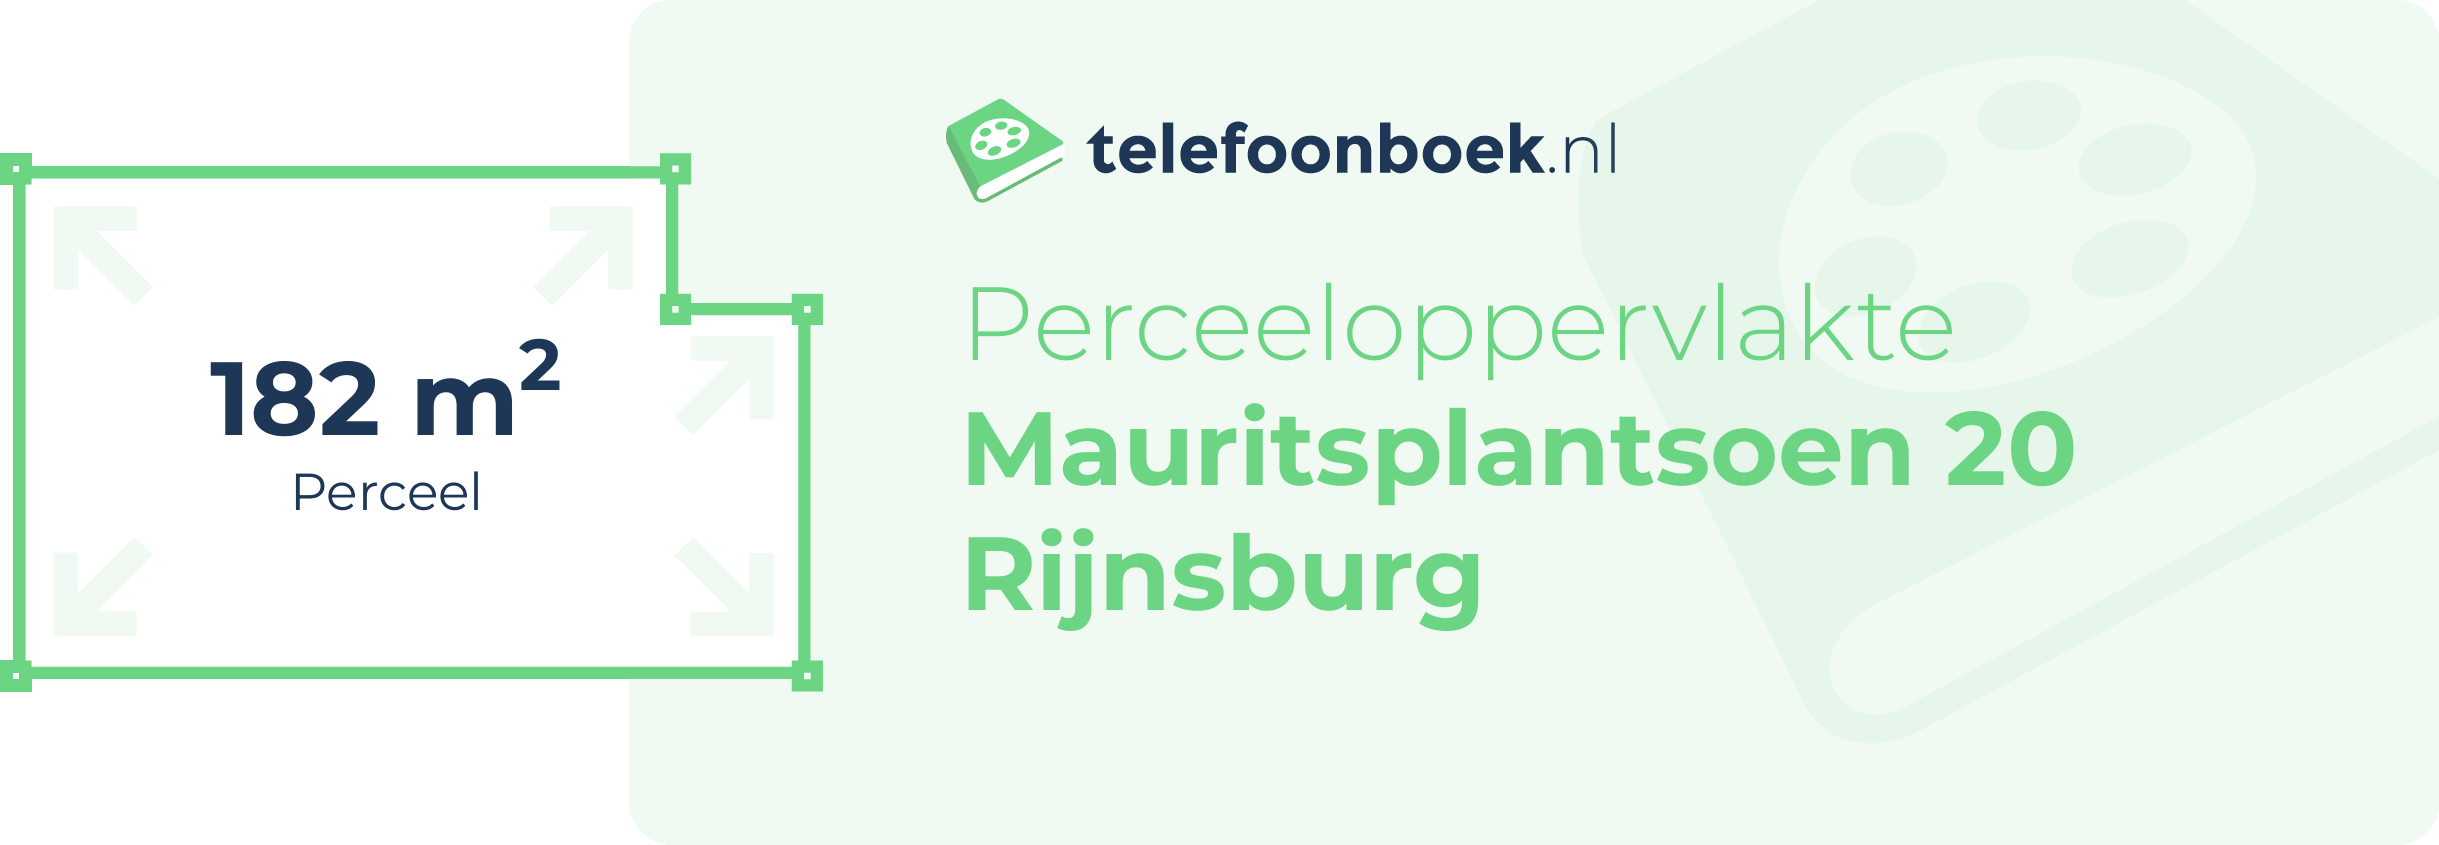 Perceeloppervlakte Mauritsplantsoen 20 Rijnsburg